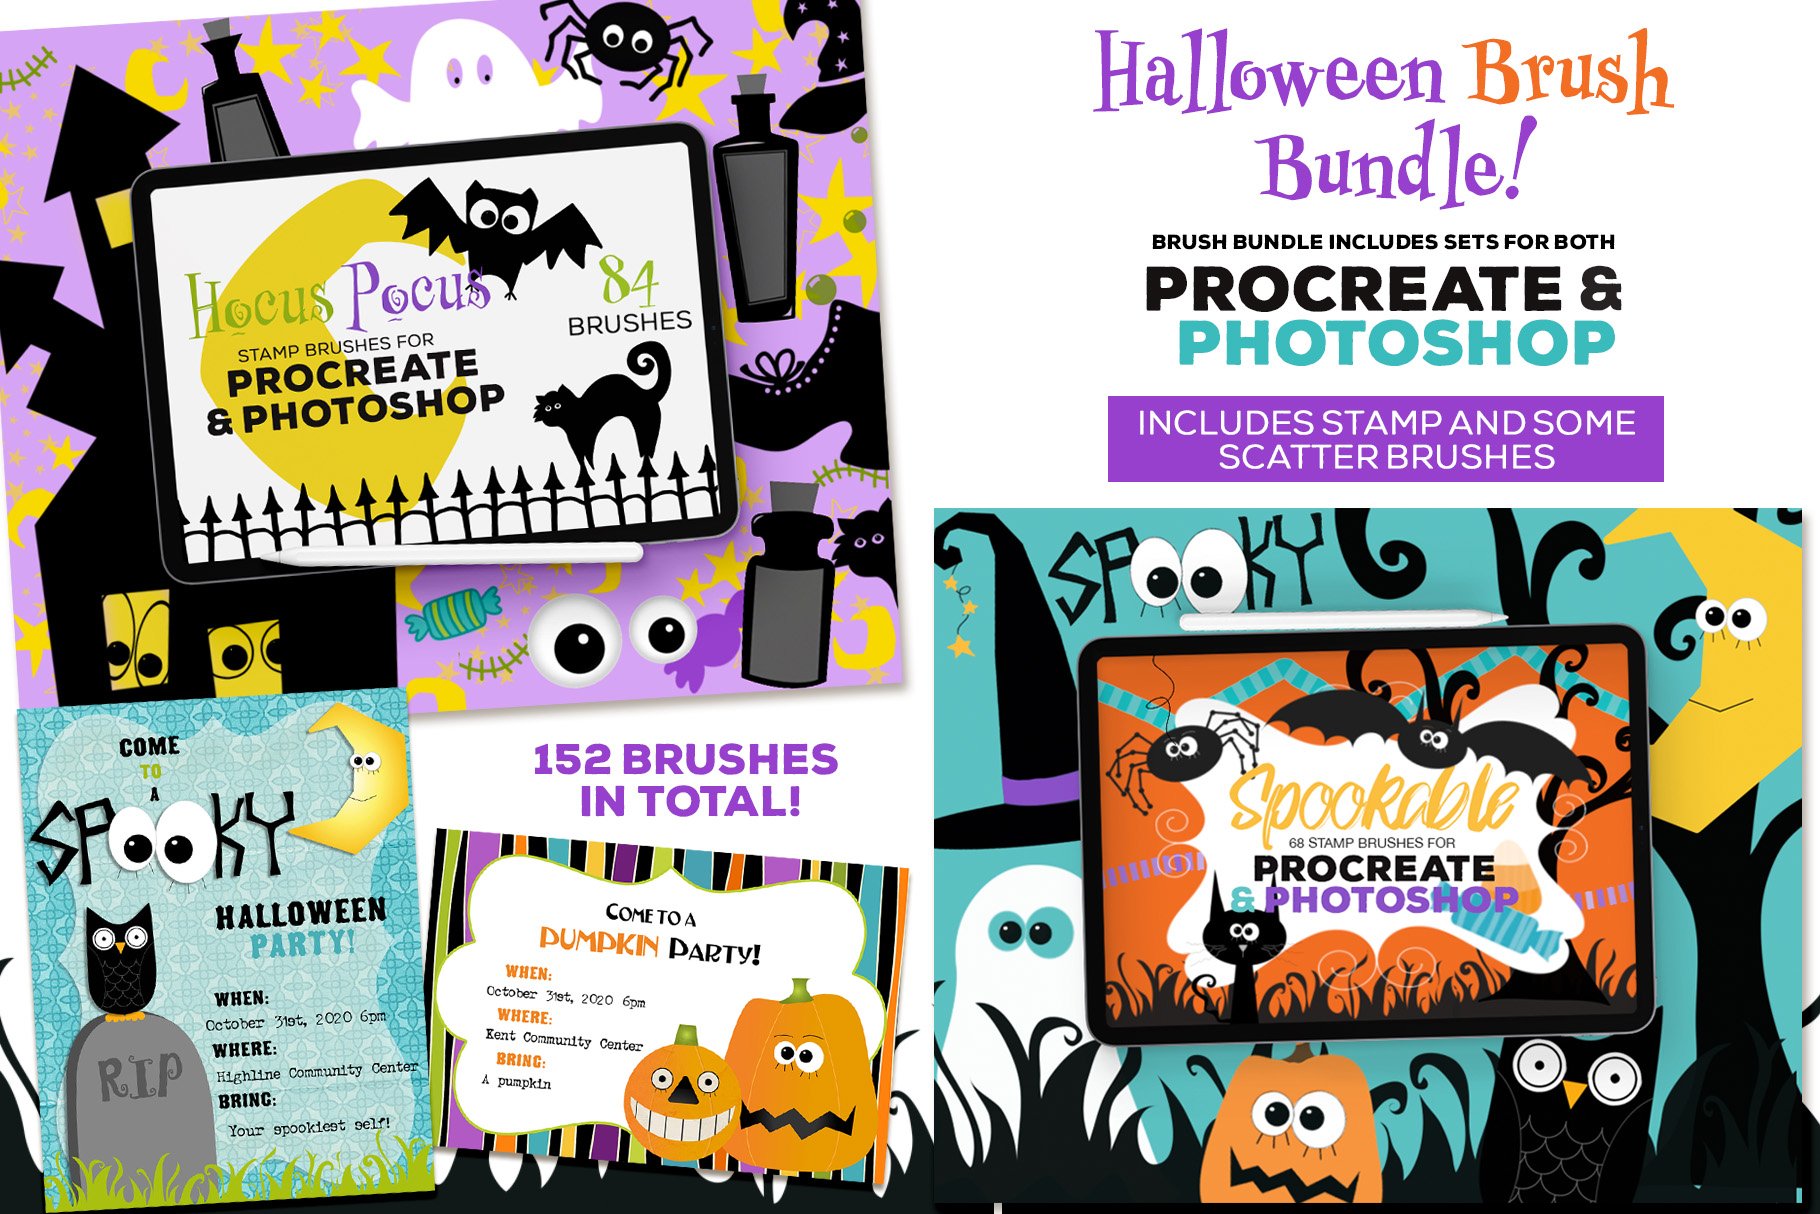 Halloween Brush Bundle Procreate PScover image.